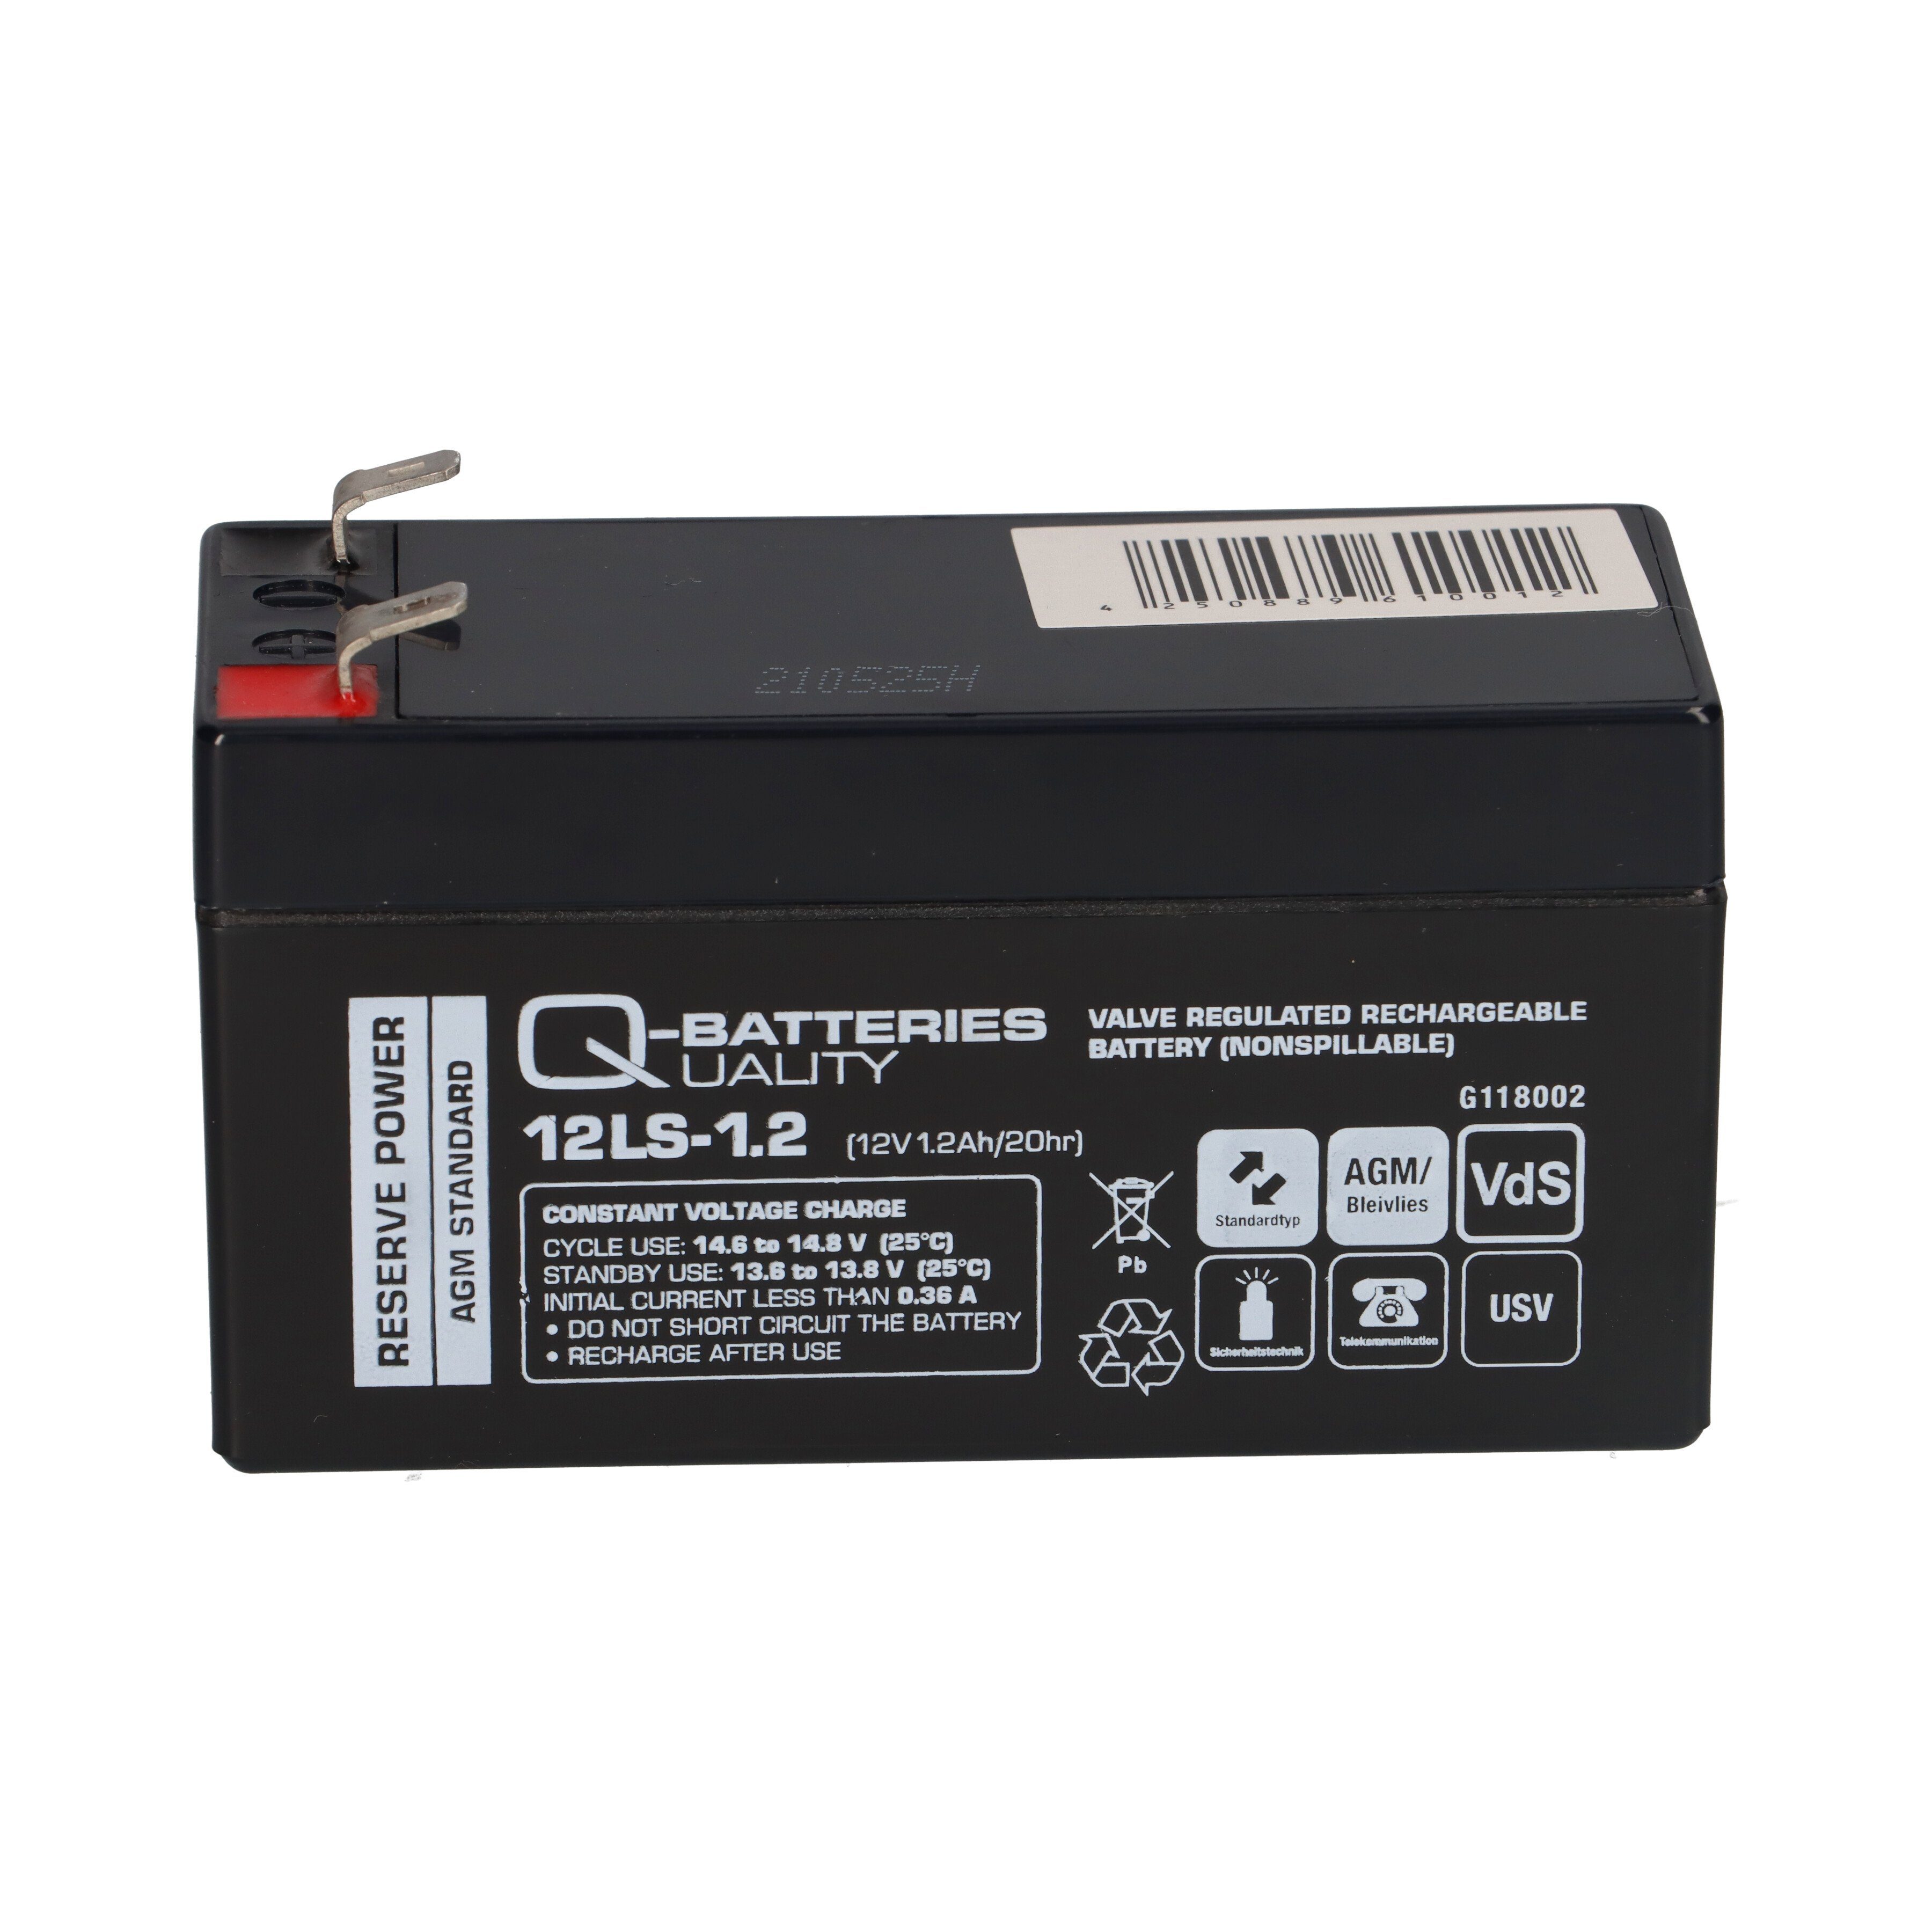 Q-Batteries 12V Blei-Vlies AGM Q-Batteries VRLA VdS Bleiakkus / 12LS-1.2 mit Akku 1,2Ah